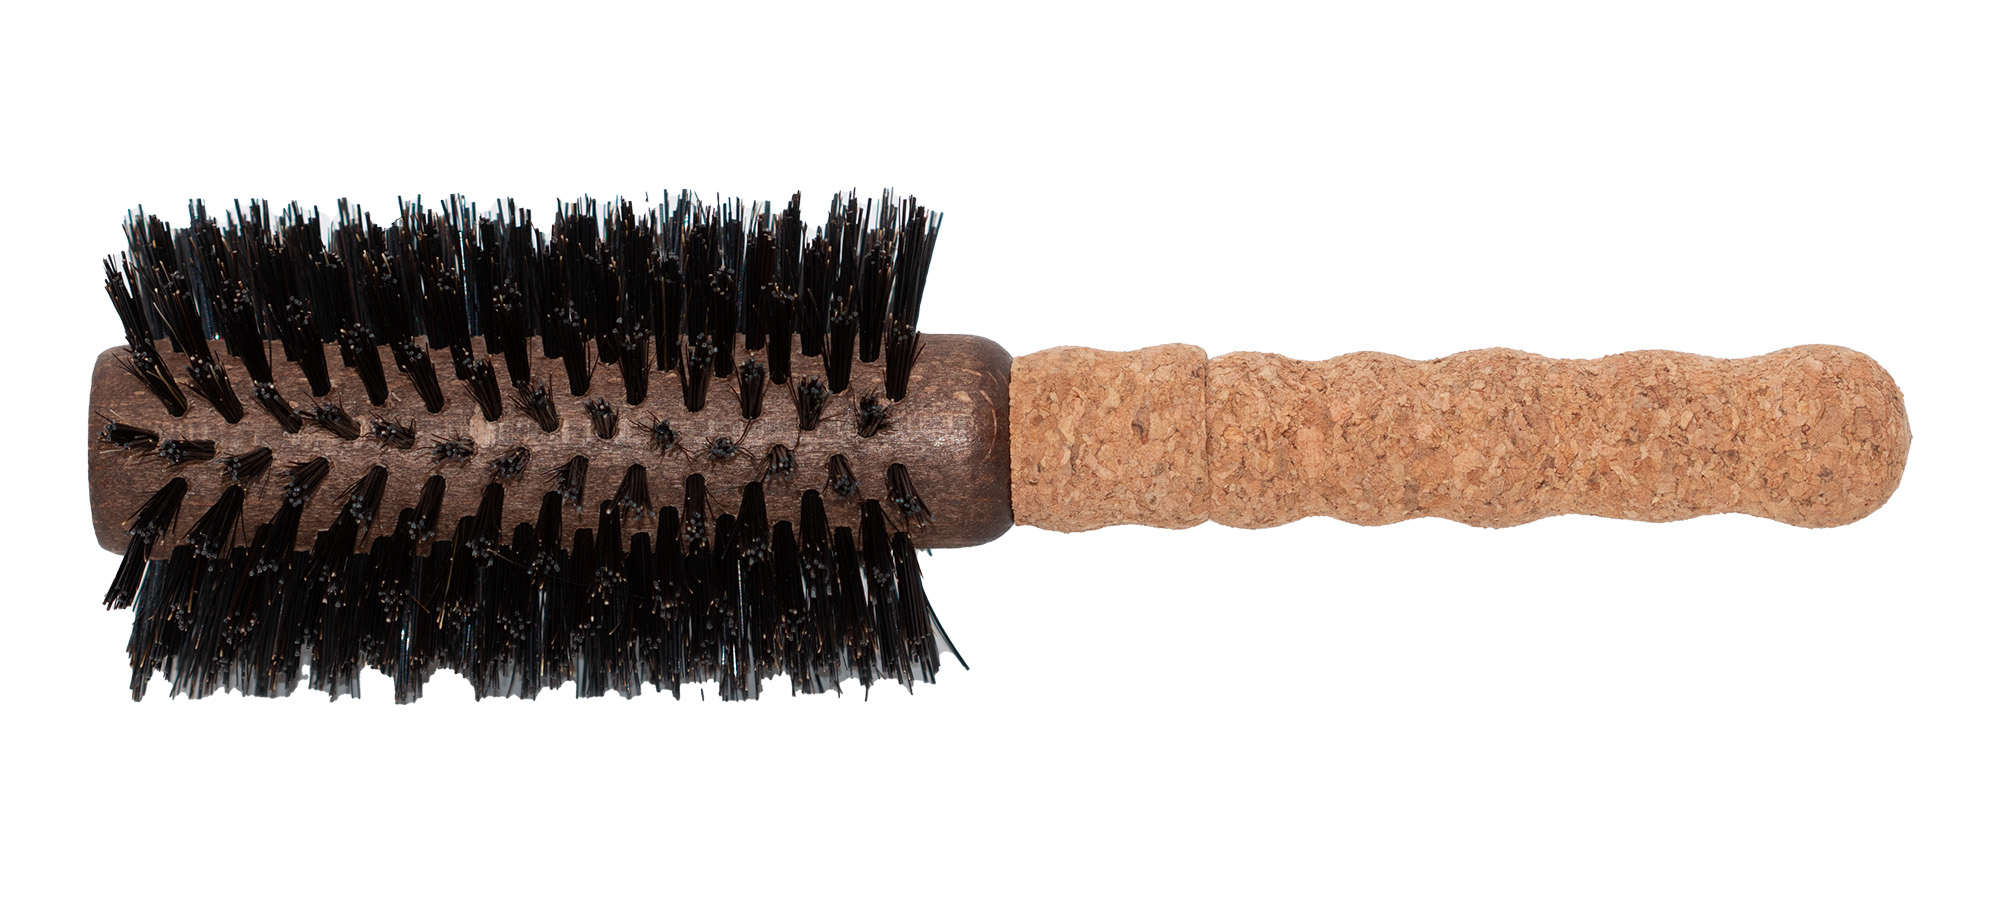 Ibiza Hair Brush - G4 Boar Bristle Round Hair Brush for Coarse Hair - Salon Quality - Heat Resistant 65mm Brush